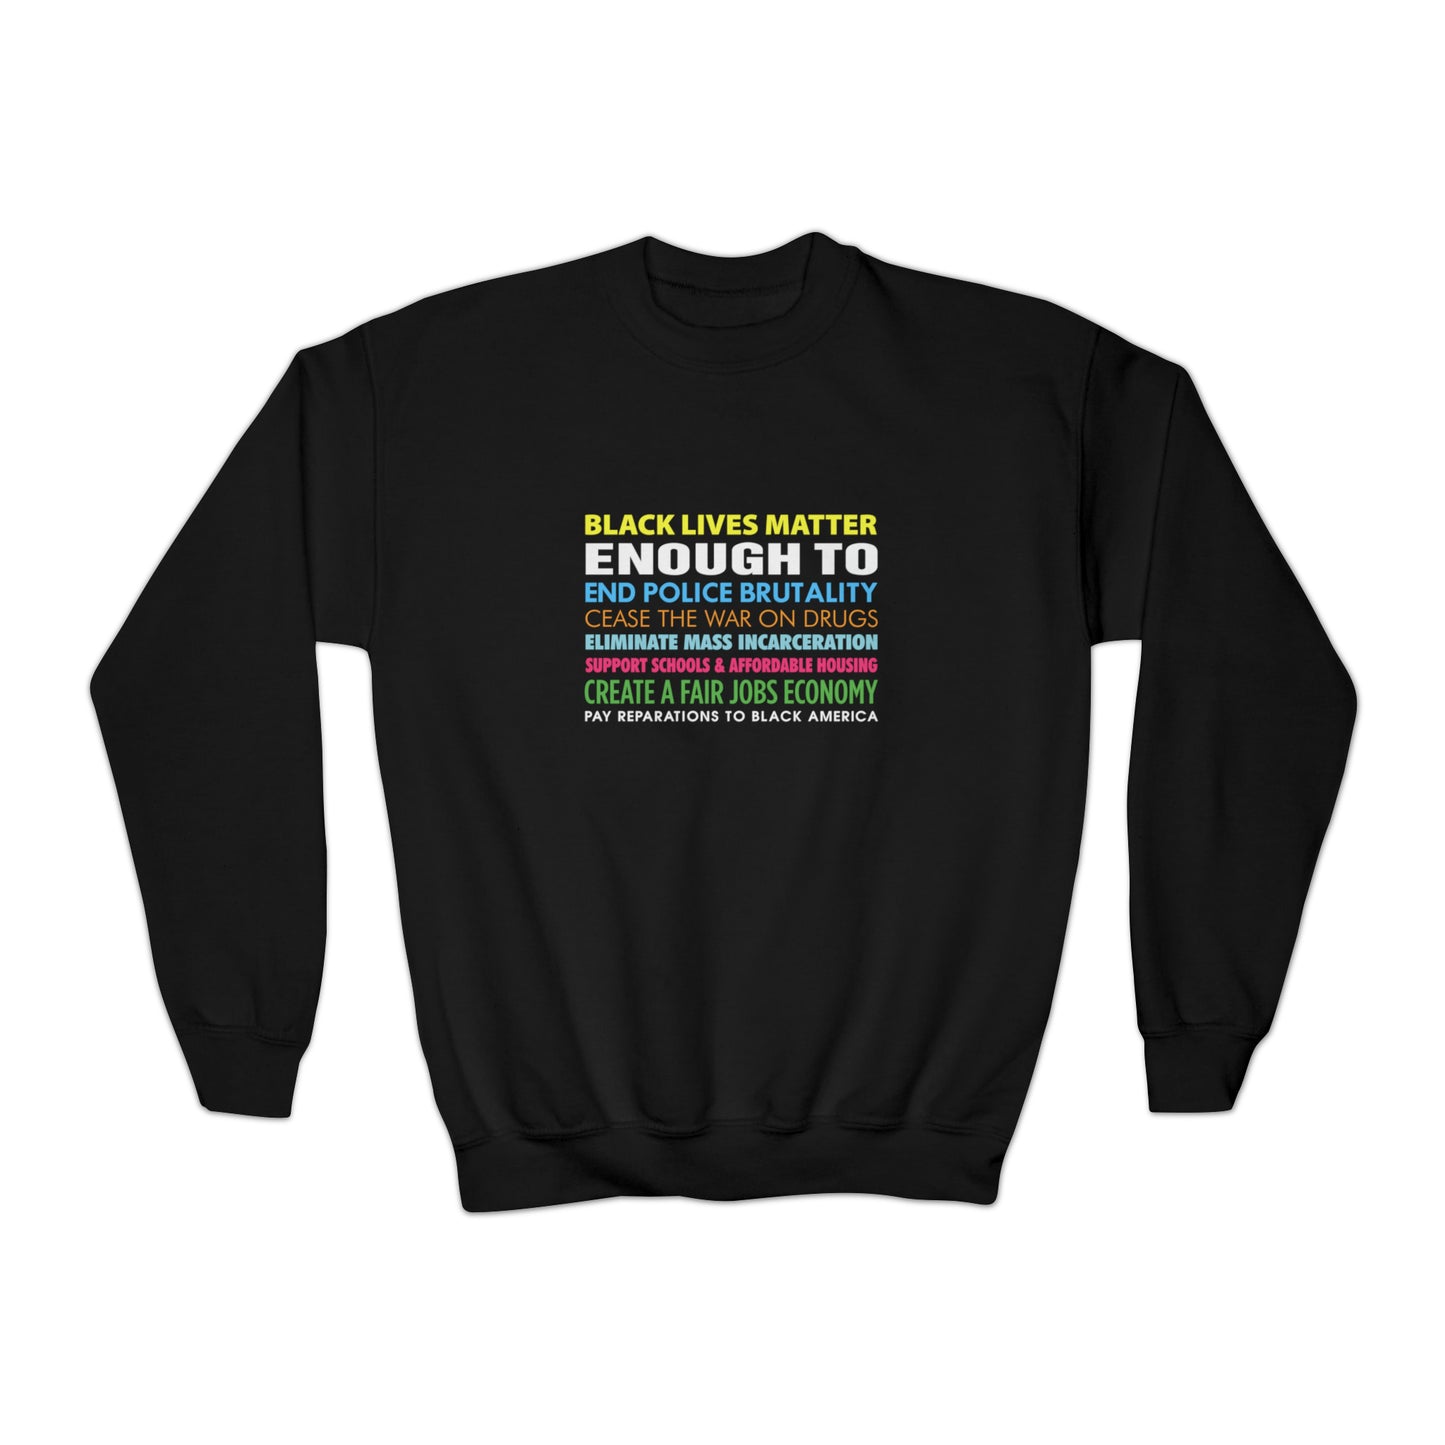 “Black Lives Matter Enough To” Youth Sweatshirt